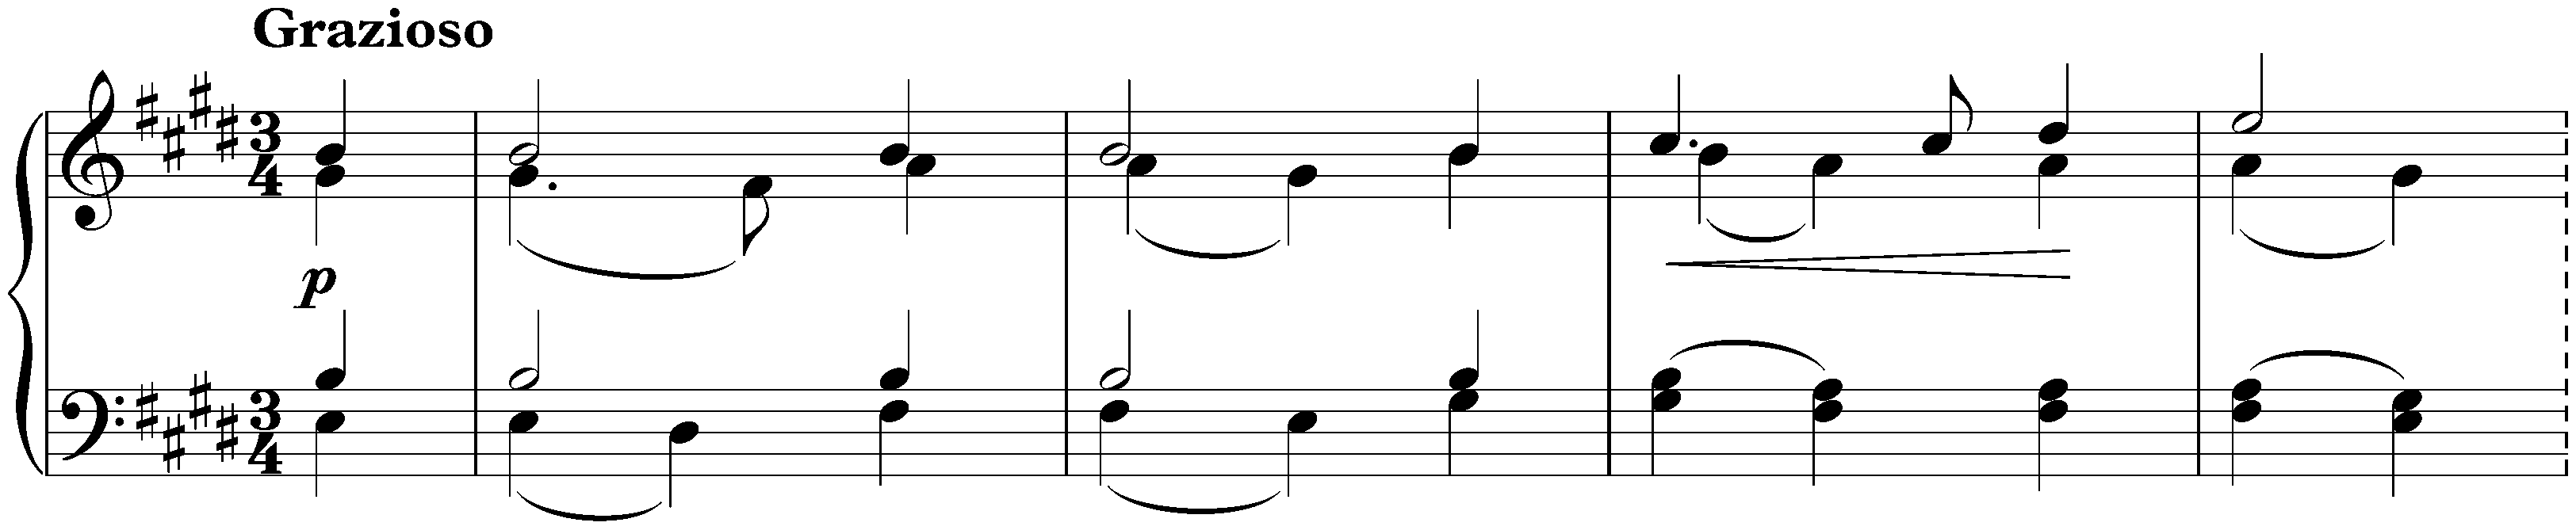 Sixteen Waltzes, op. 39; 5. E major (simplified version)